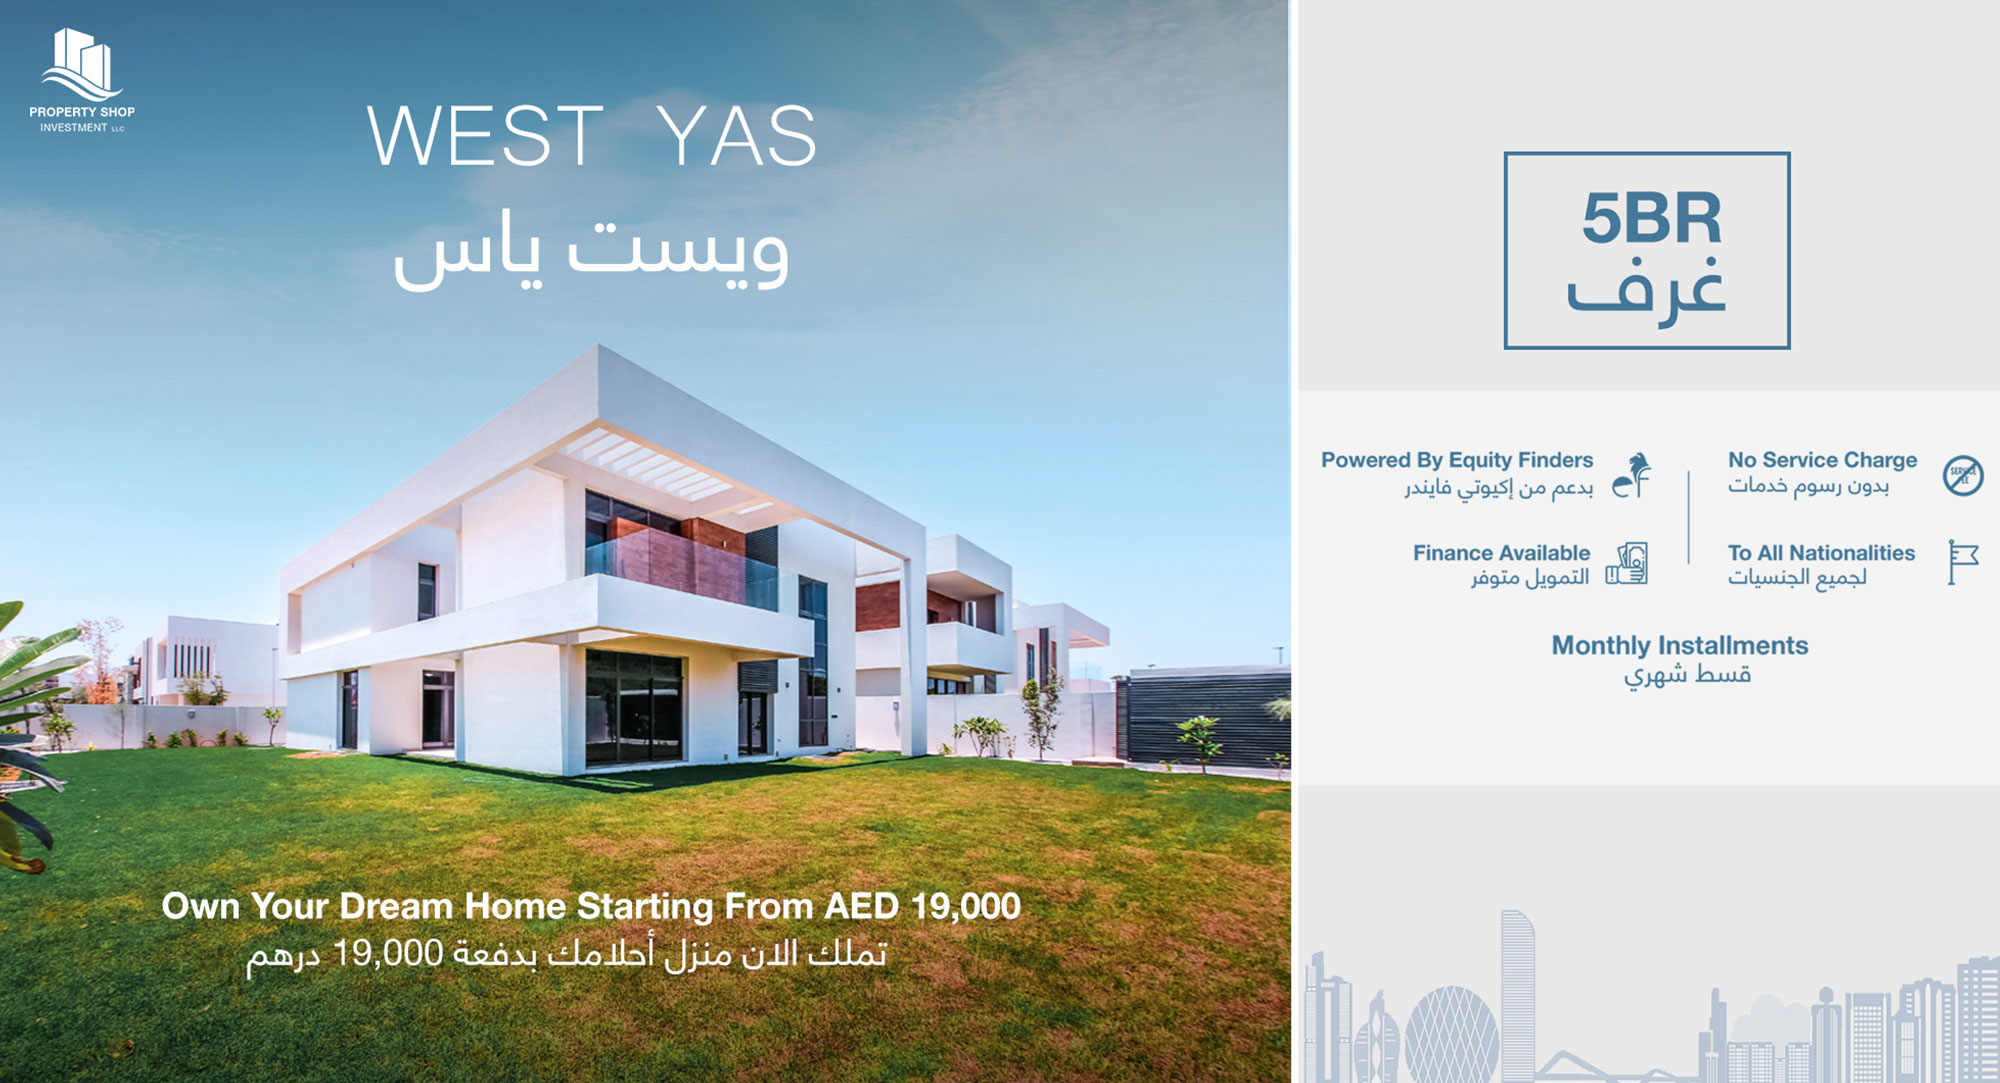 Abu Dhabi Real Estate - Property Shop Investment LLC